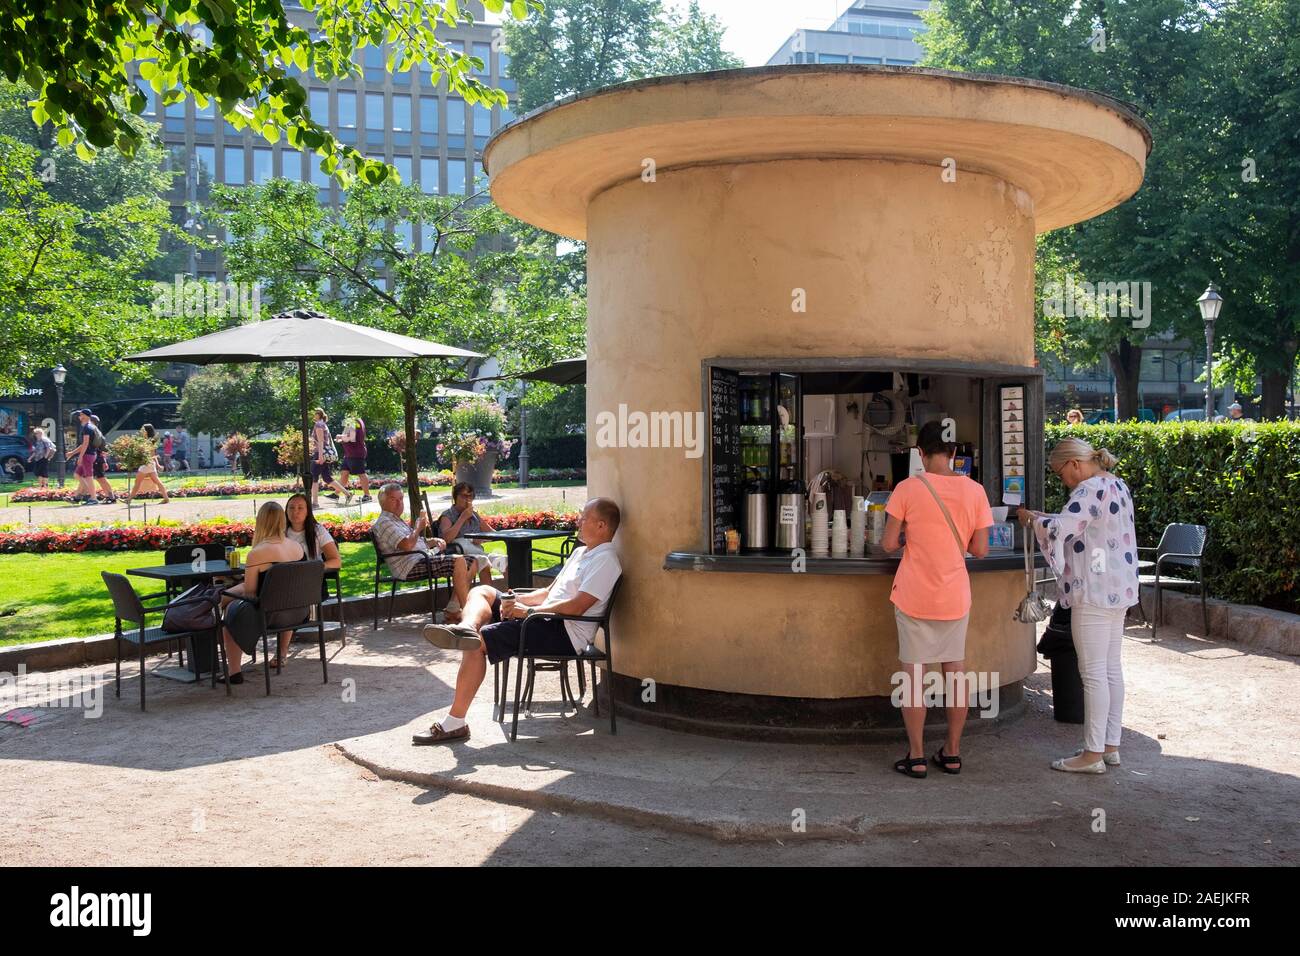 The coffee kiosk -Fotos und -Bildmaterial in hoher Auflösung – Alamy